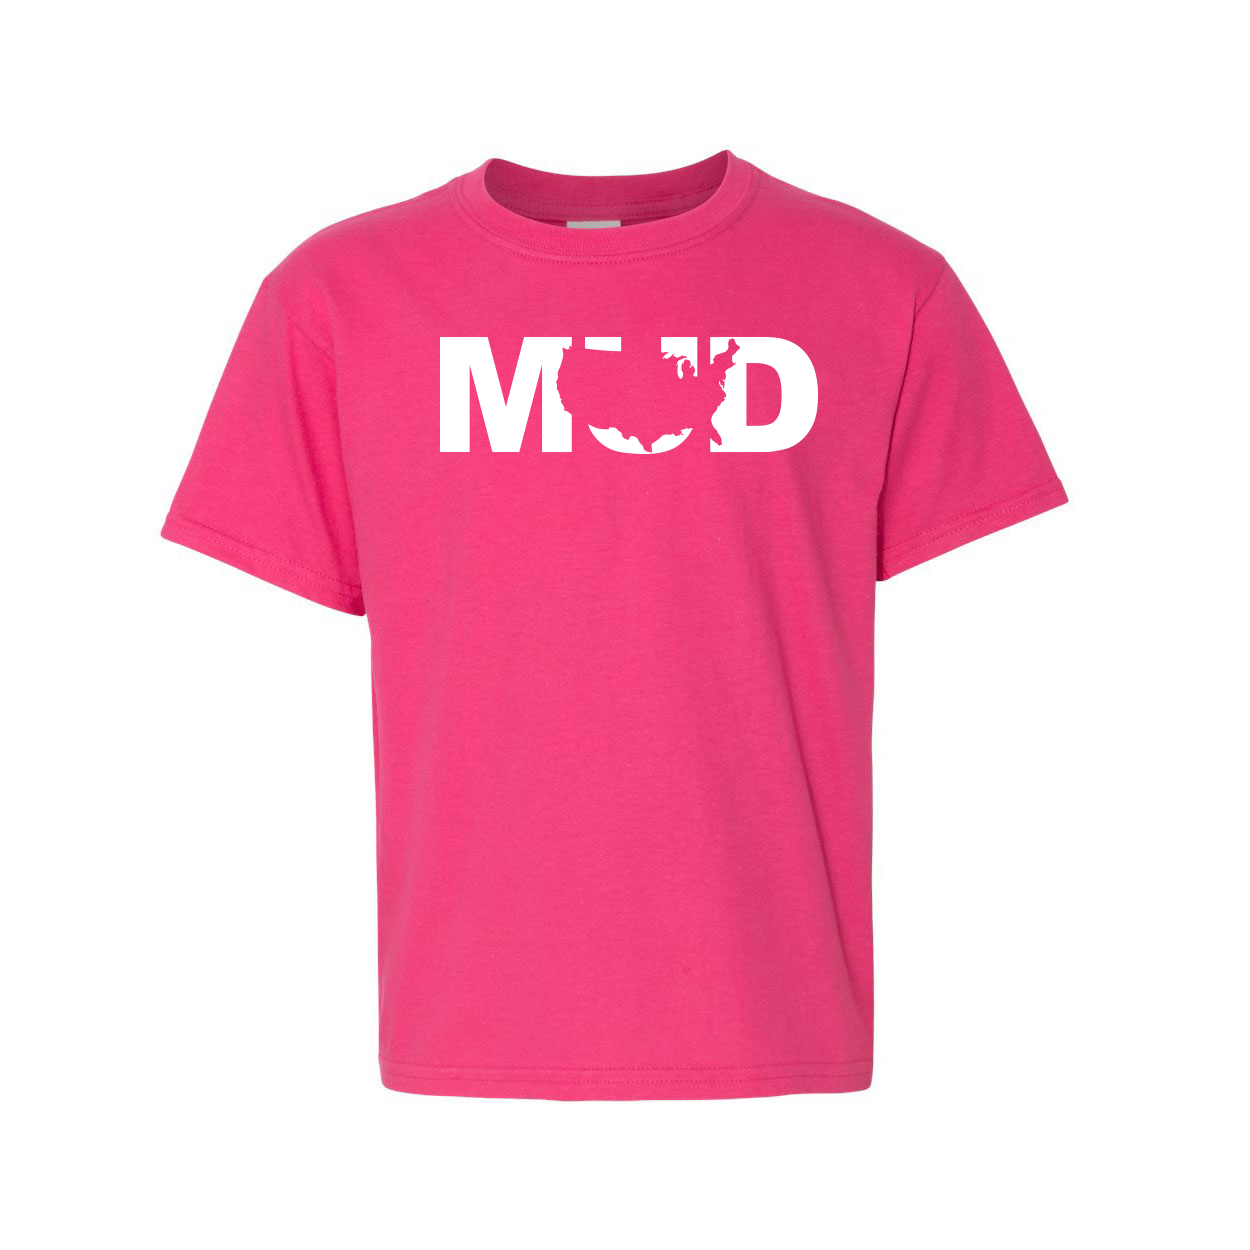 Mud United States Classic Youth T-Shirt Pink (White Logo)